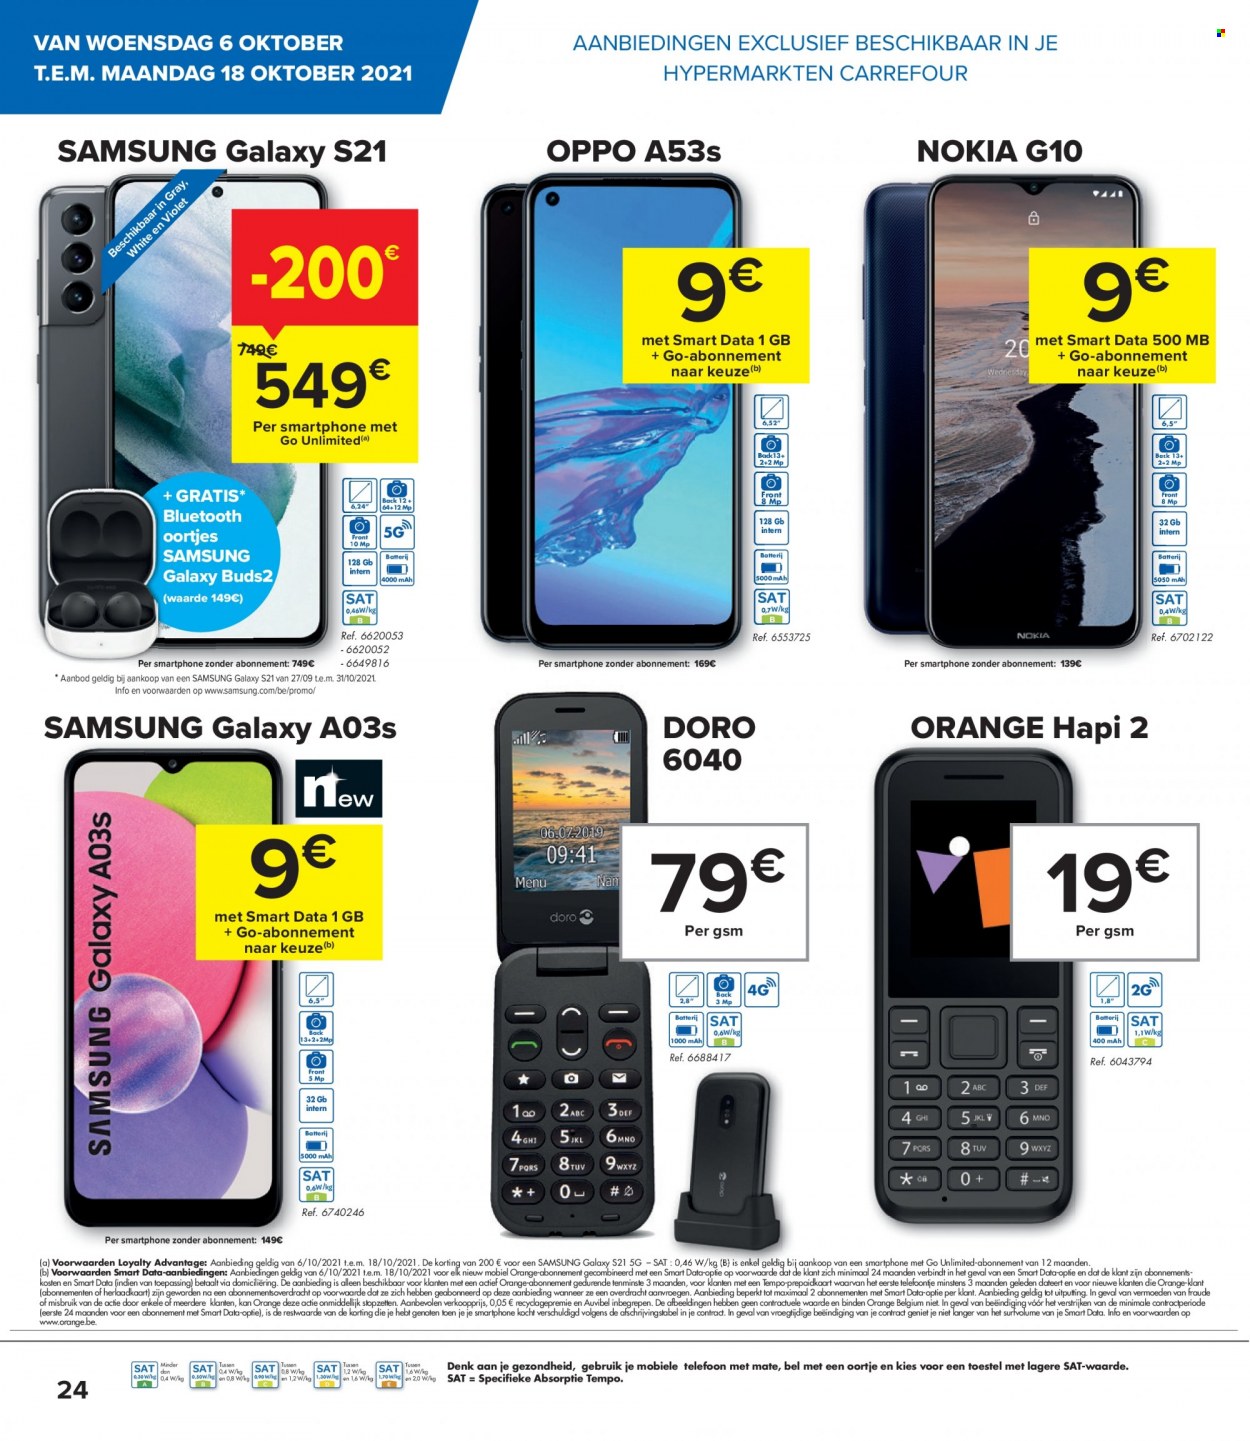 thumbnail - Catalogue Carrefour hypermarkt - 06/10/2021 - 18/10/2021 - Produits soldés - Nokia, smartphone, Oppo, Samsung. Page 4.